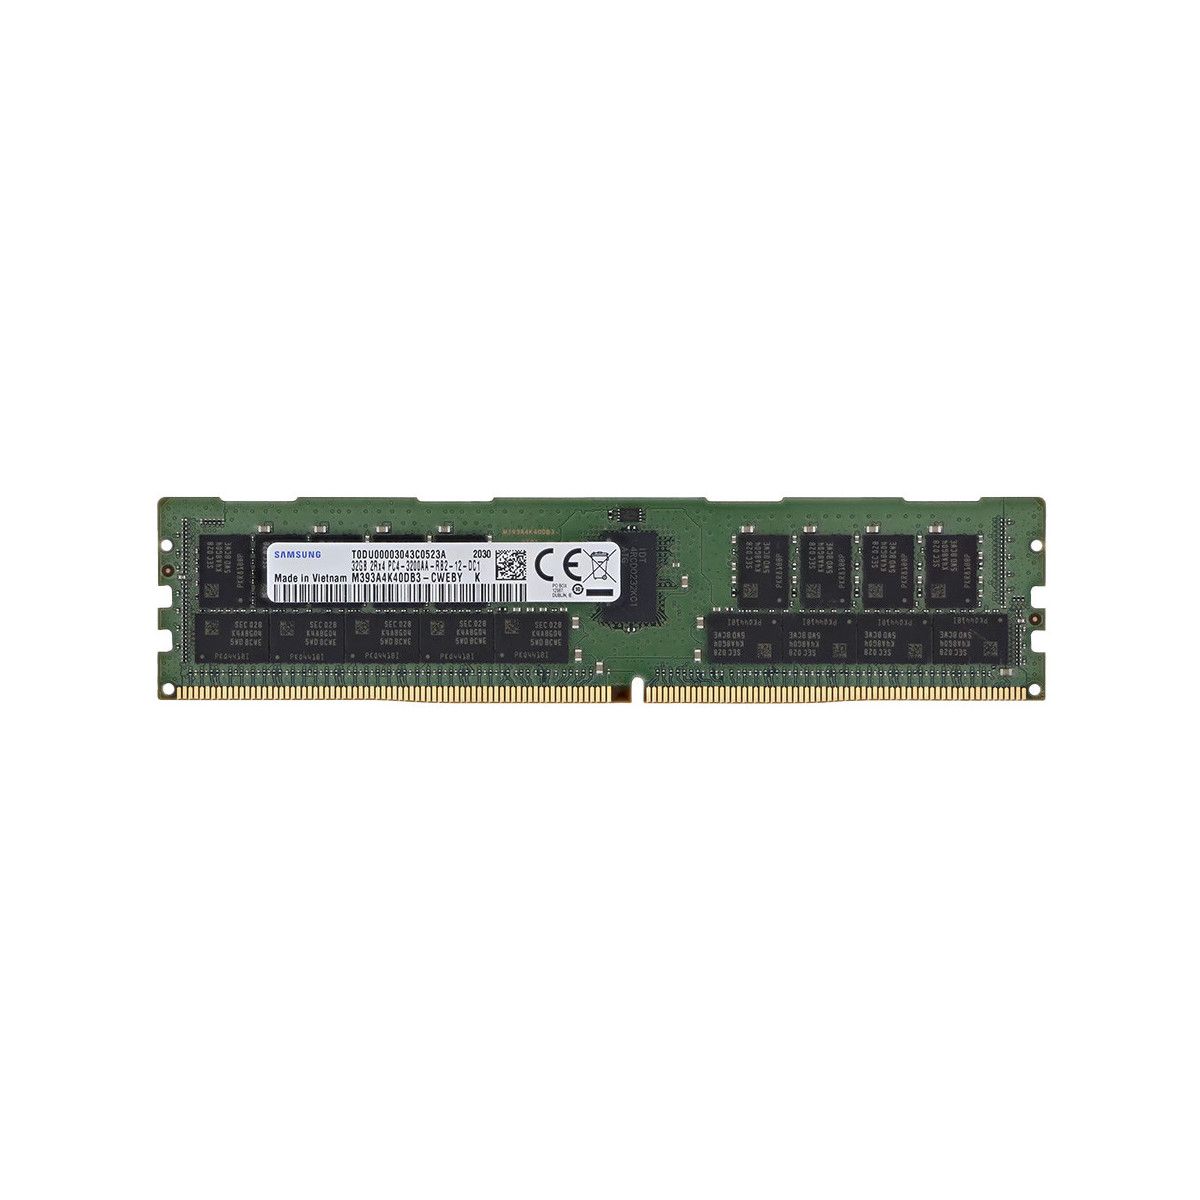 P06033-K21-MS - Memstar 1x 32GB DDR4-3200 RDIMM PC4-25600R - Mem-star OEM compatibile Memoria 1 - Memstar 